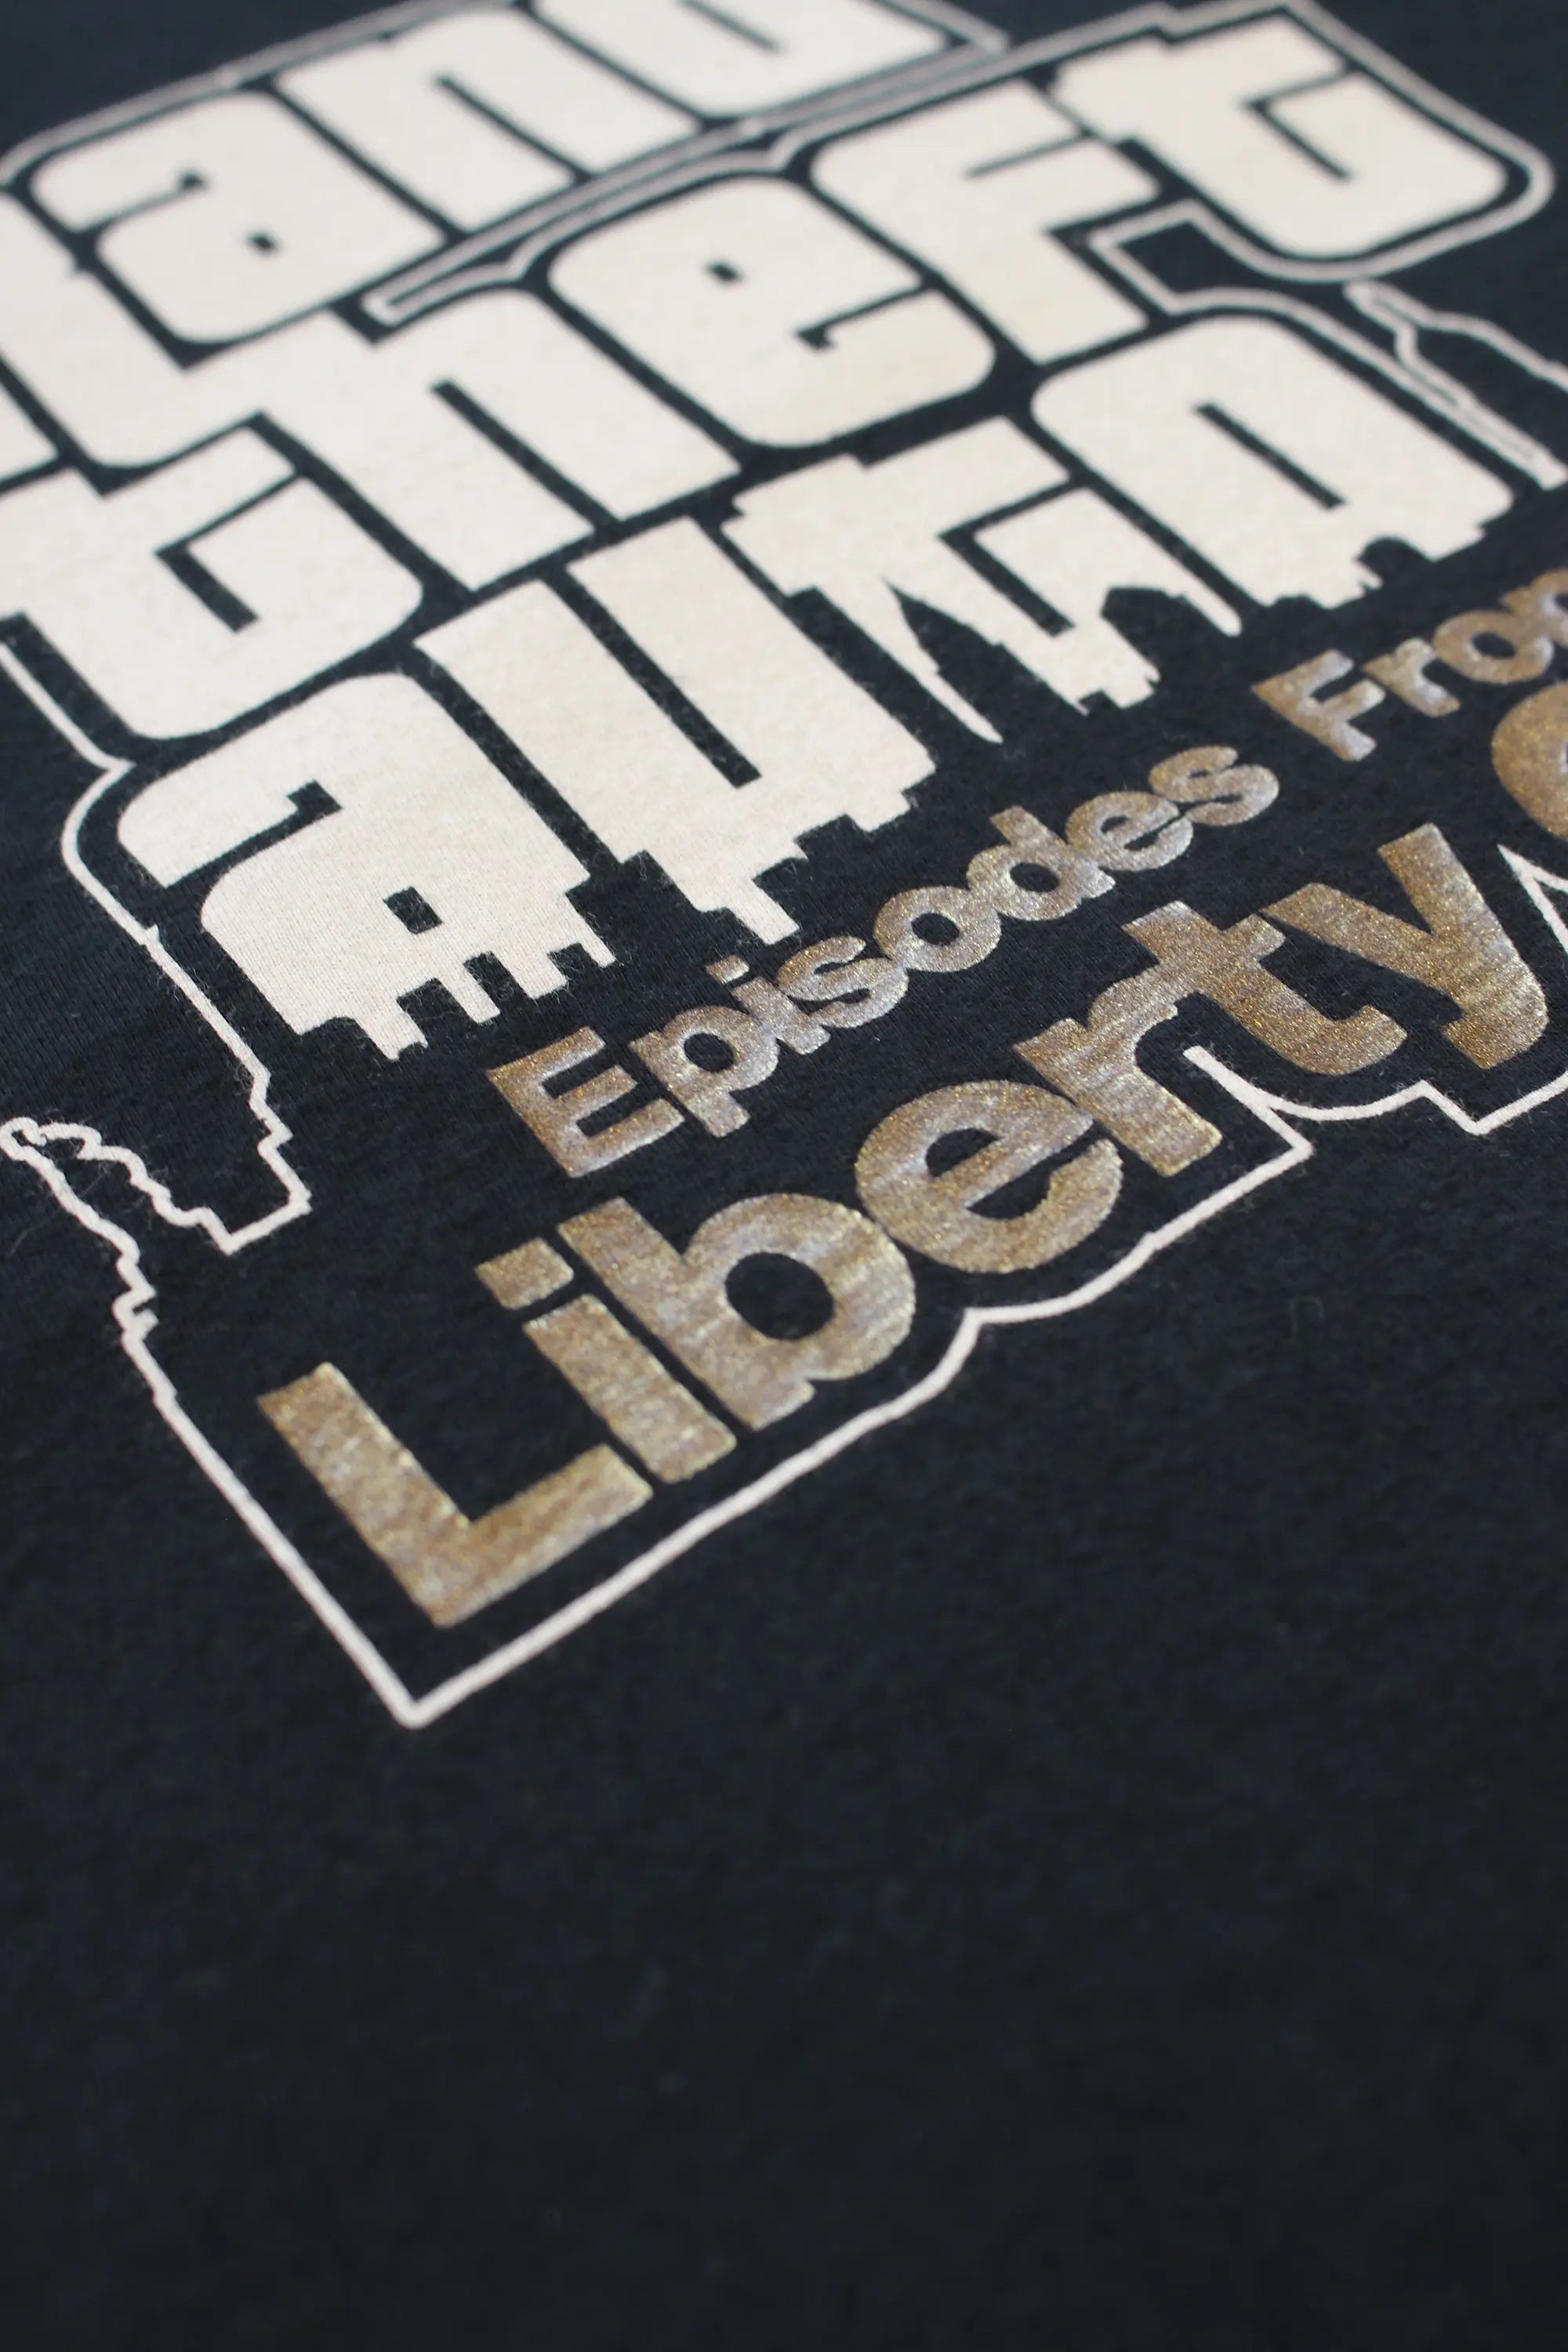 GTA Liberty City T-Shirt